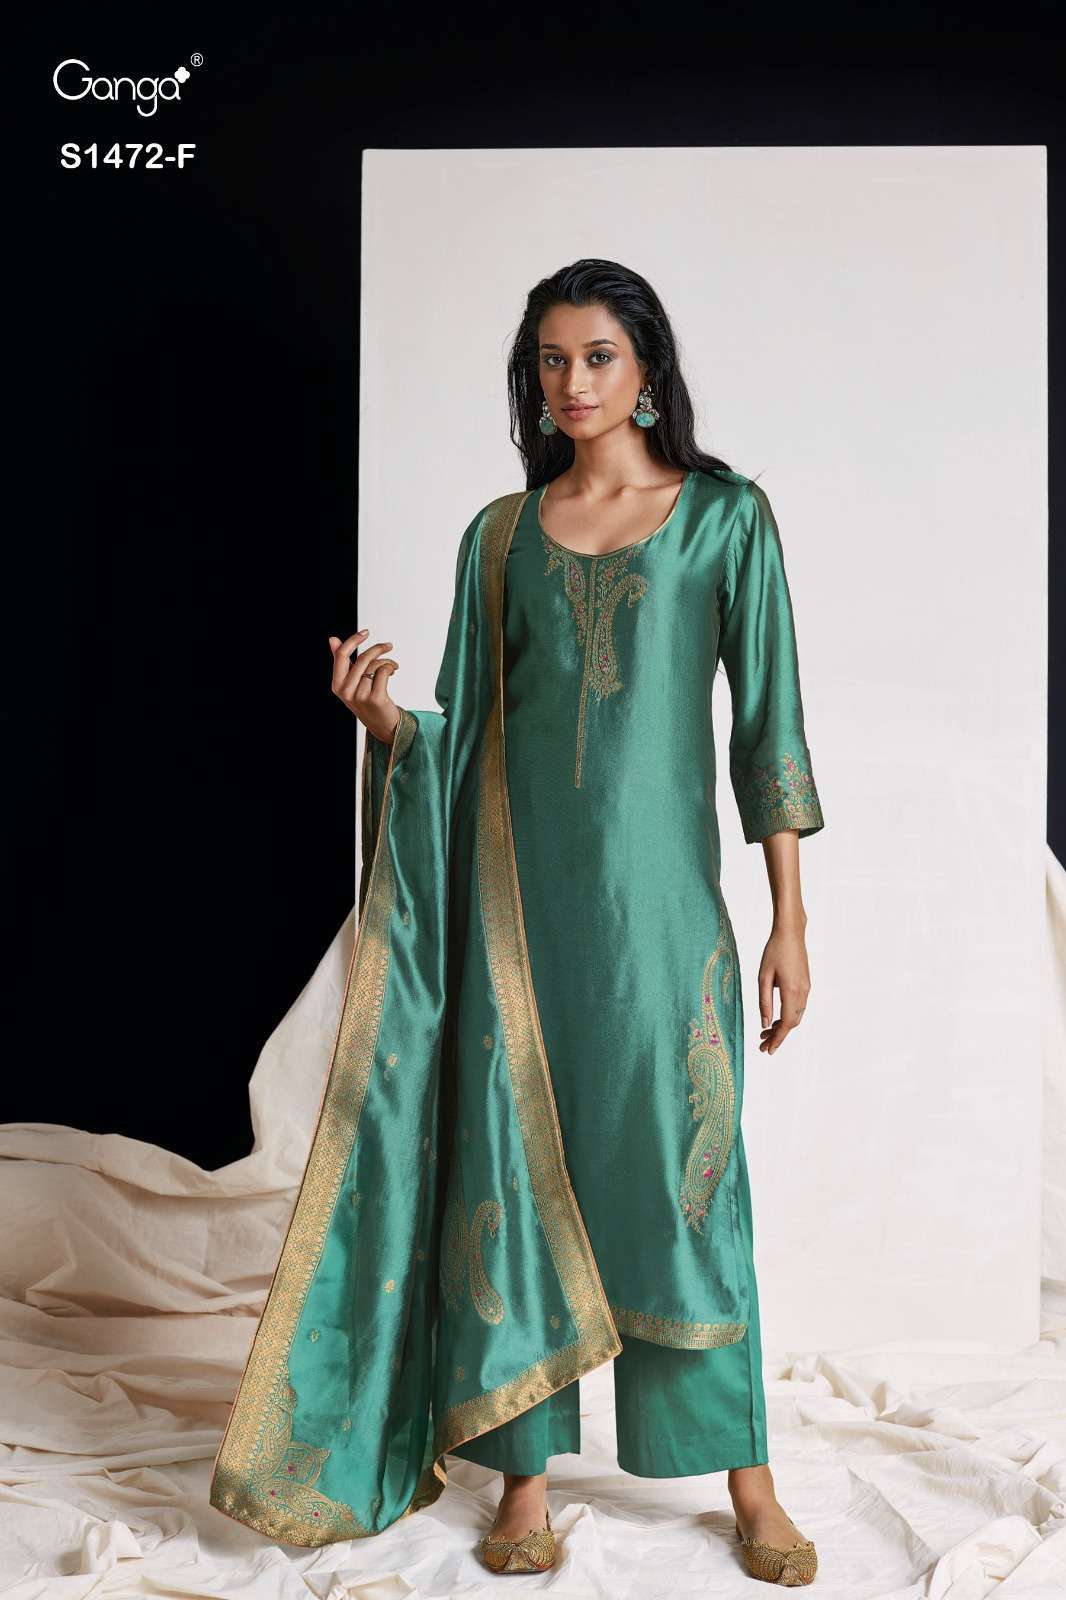 Ganga Zanna 1472 New Colors Suit Dealers